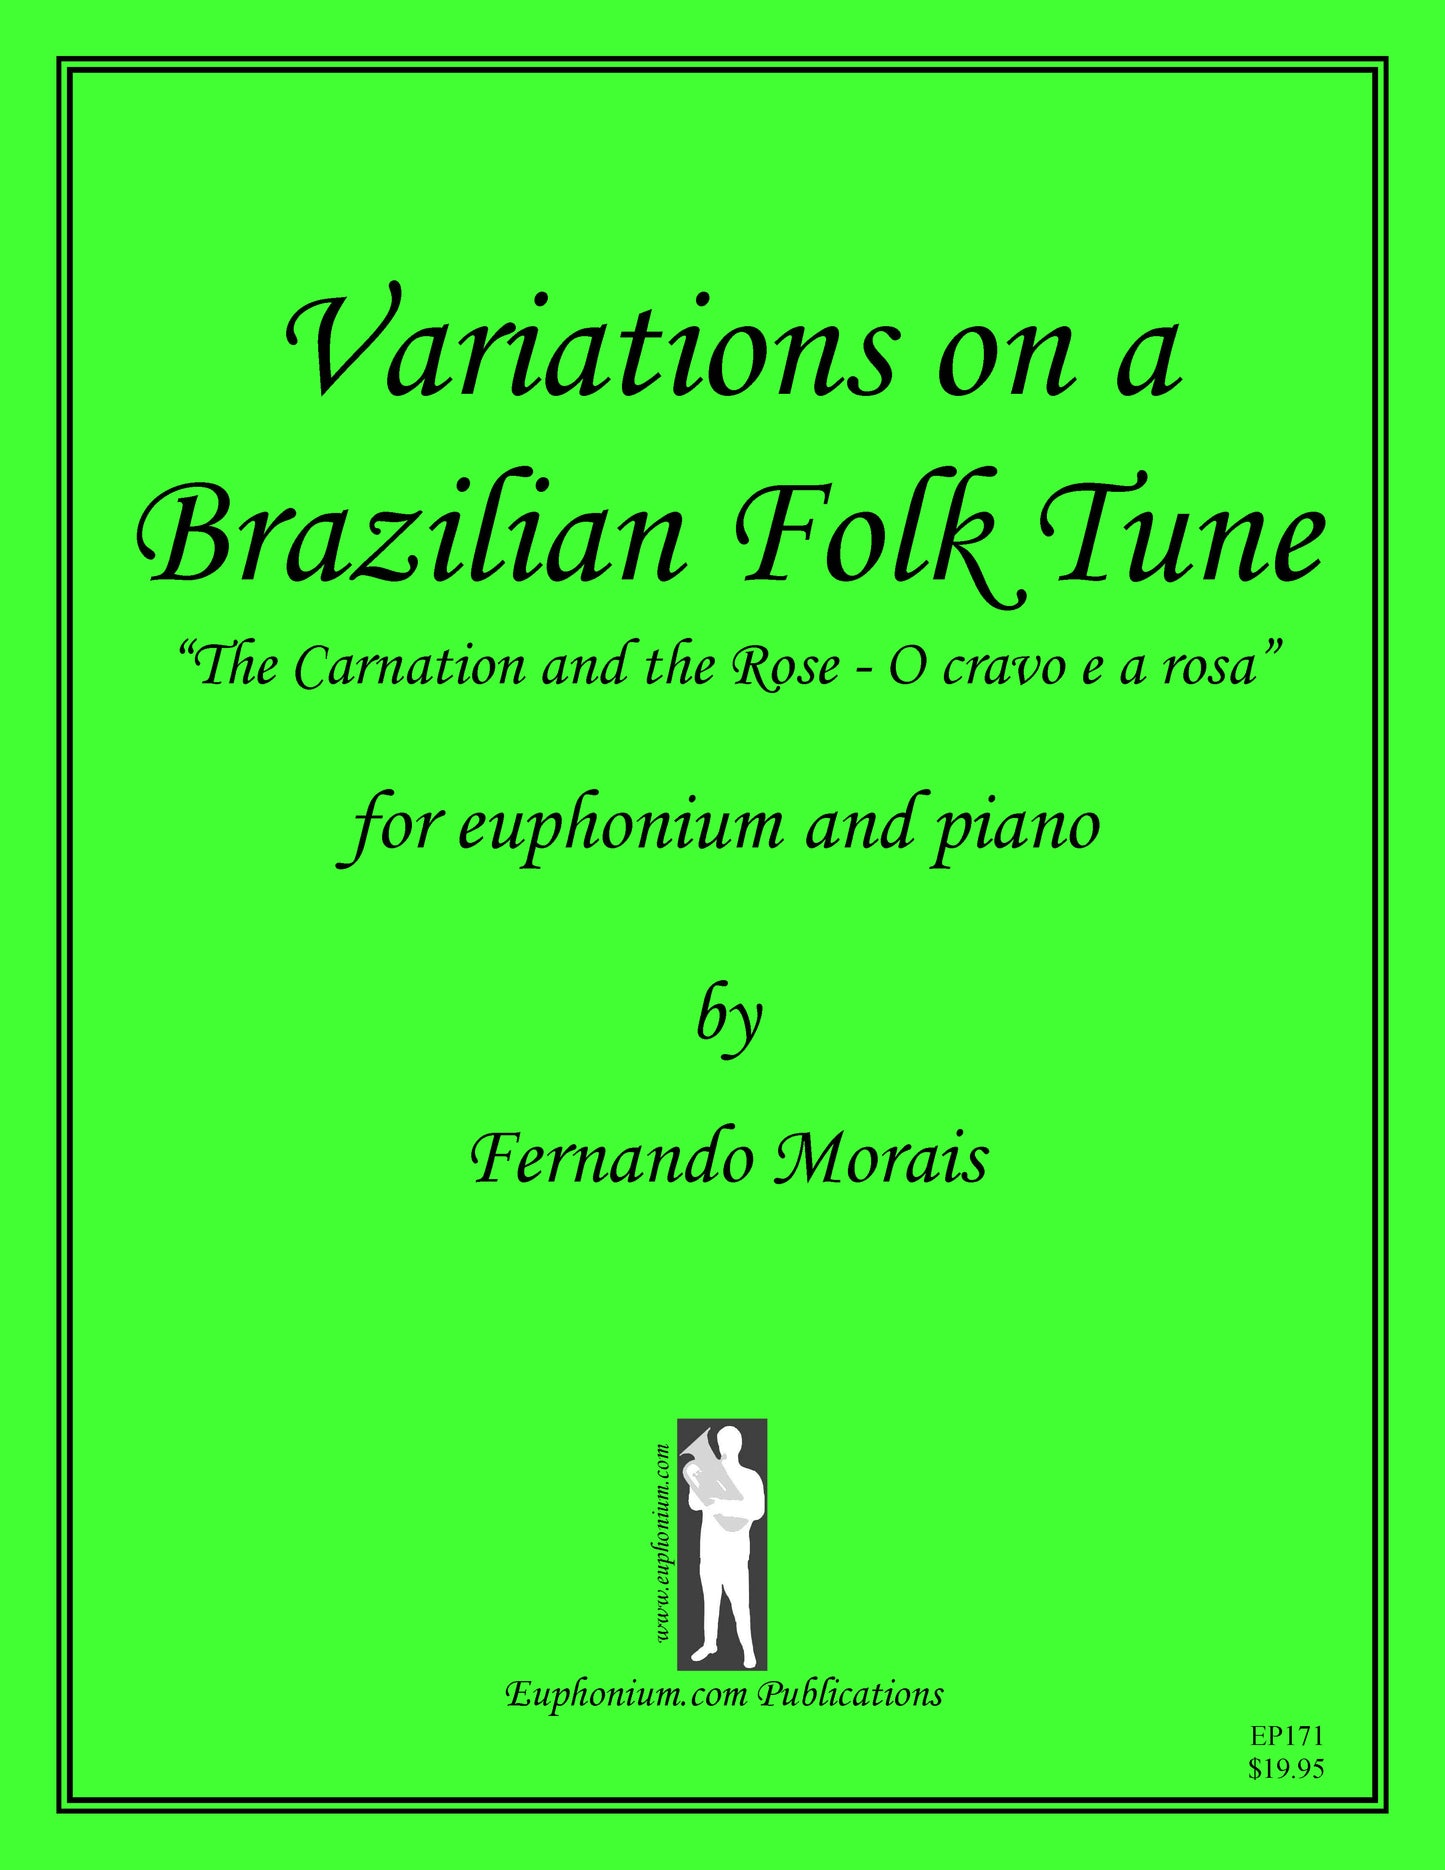 Morais - Variations on a Brazilian Folk Tune